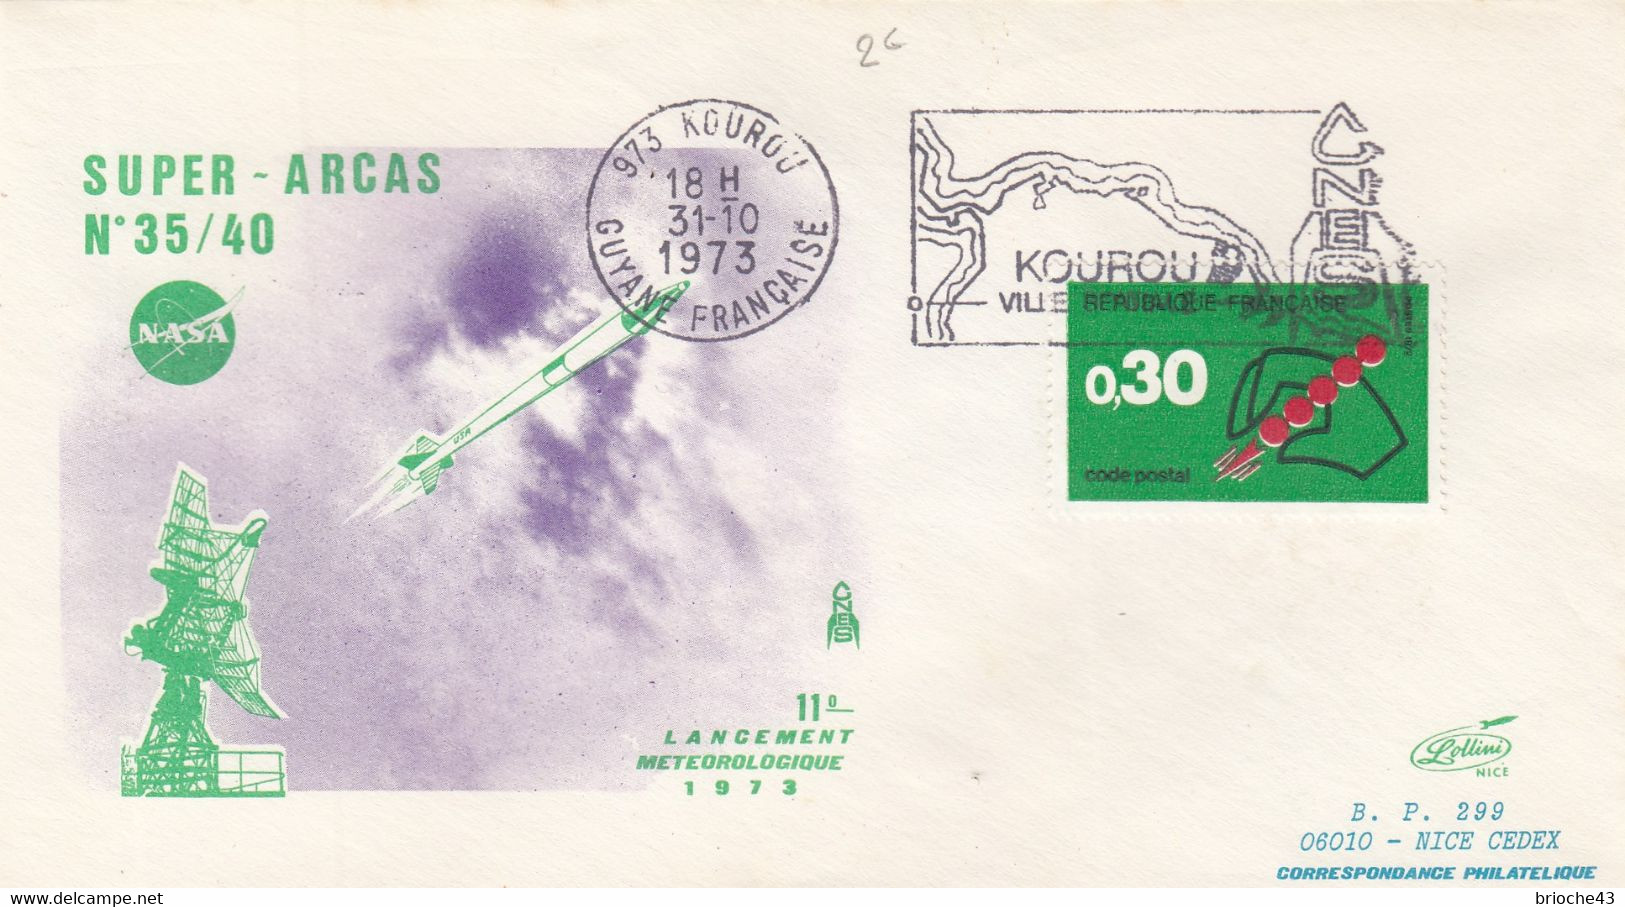 NASA - SUPER ARCAS 35/10 - 11e LANCEMENT METEO 1973 - KOUROU 31.10.1973 /1 - Other & Unclassified